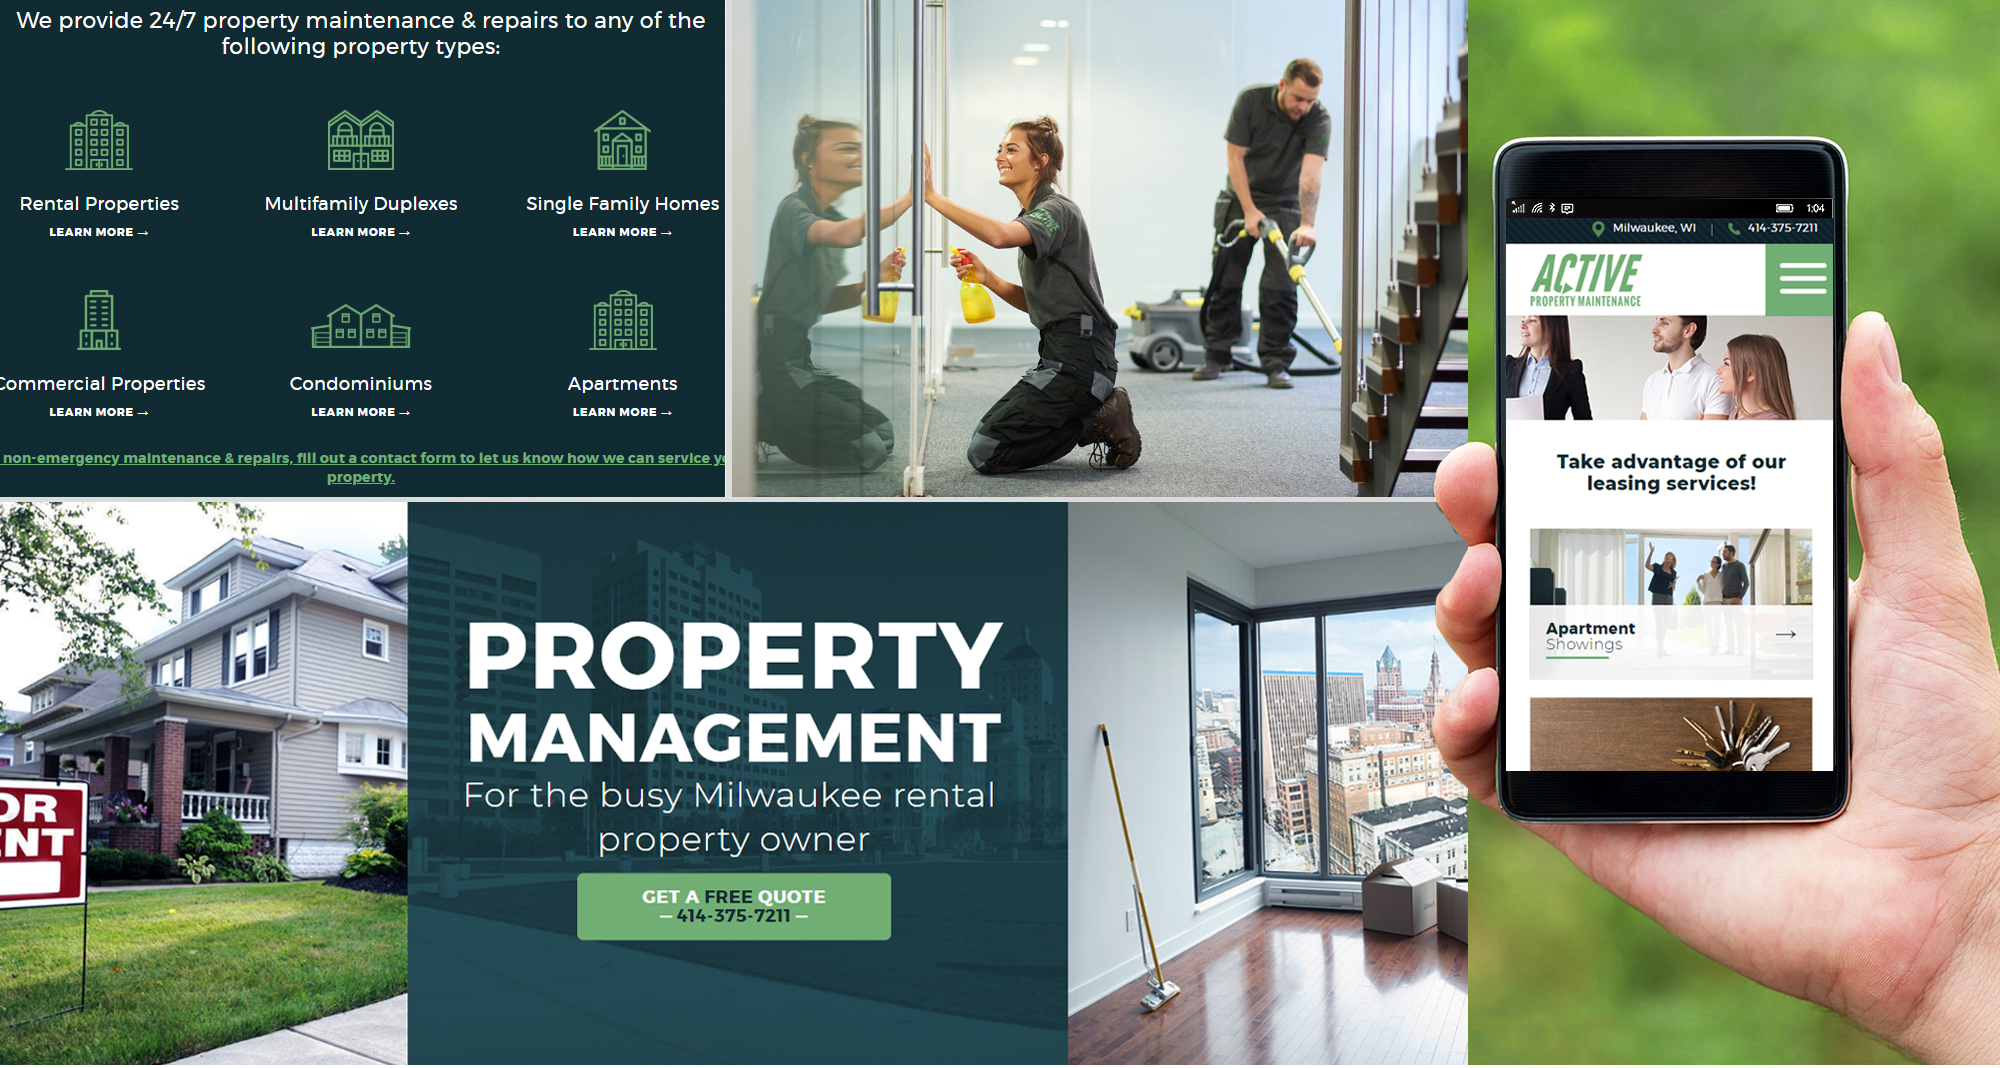 Milwaukee web marketing for Active Property Maintenance 